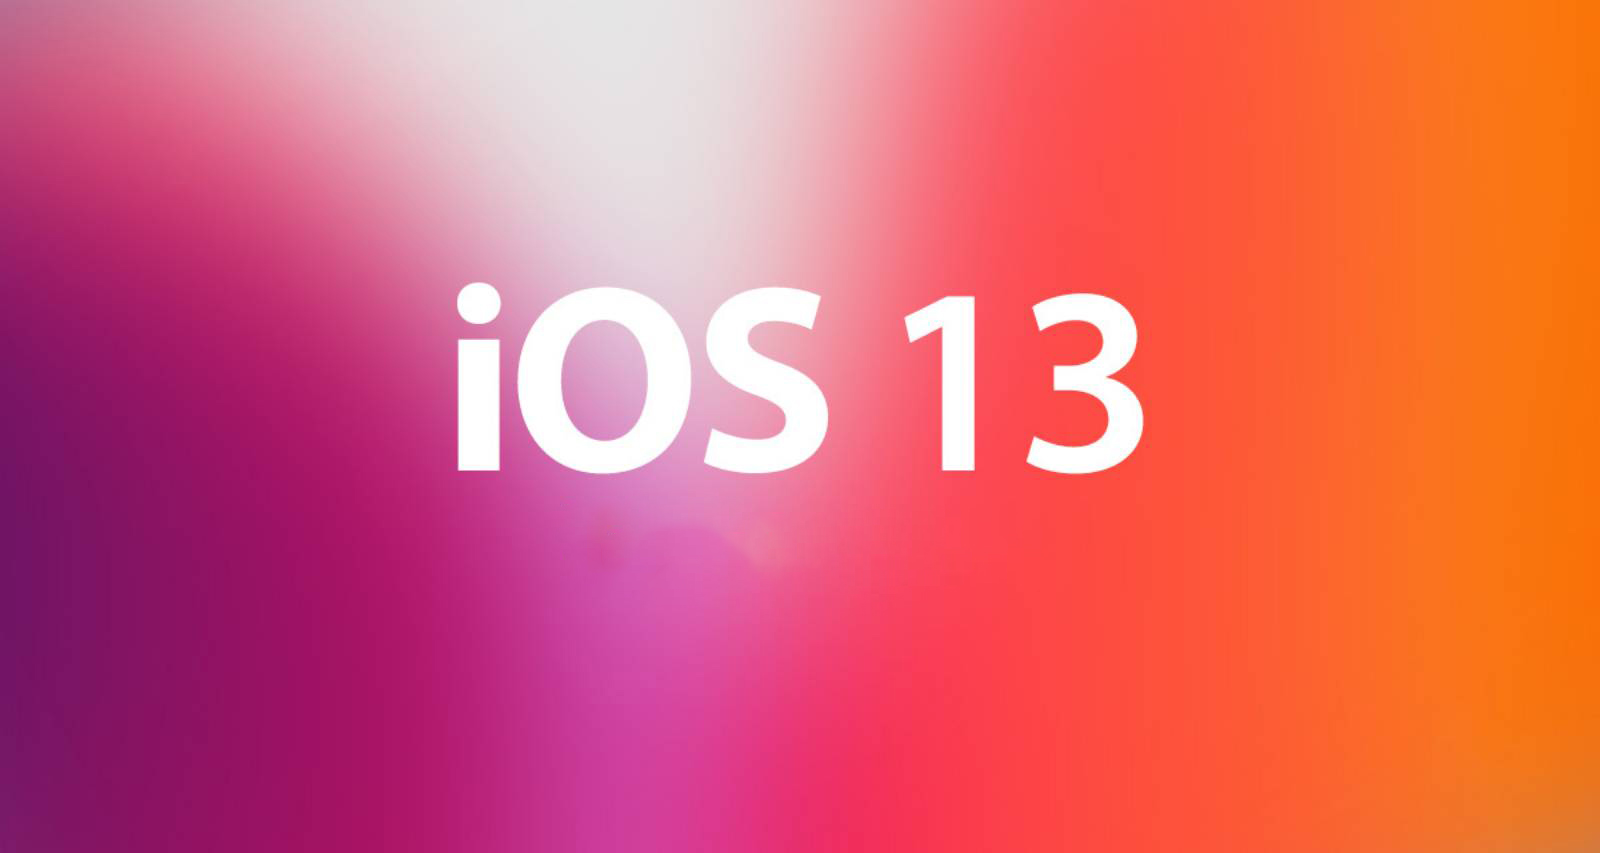 iOS 13.1 beta 2